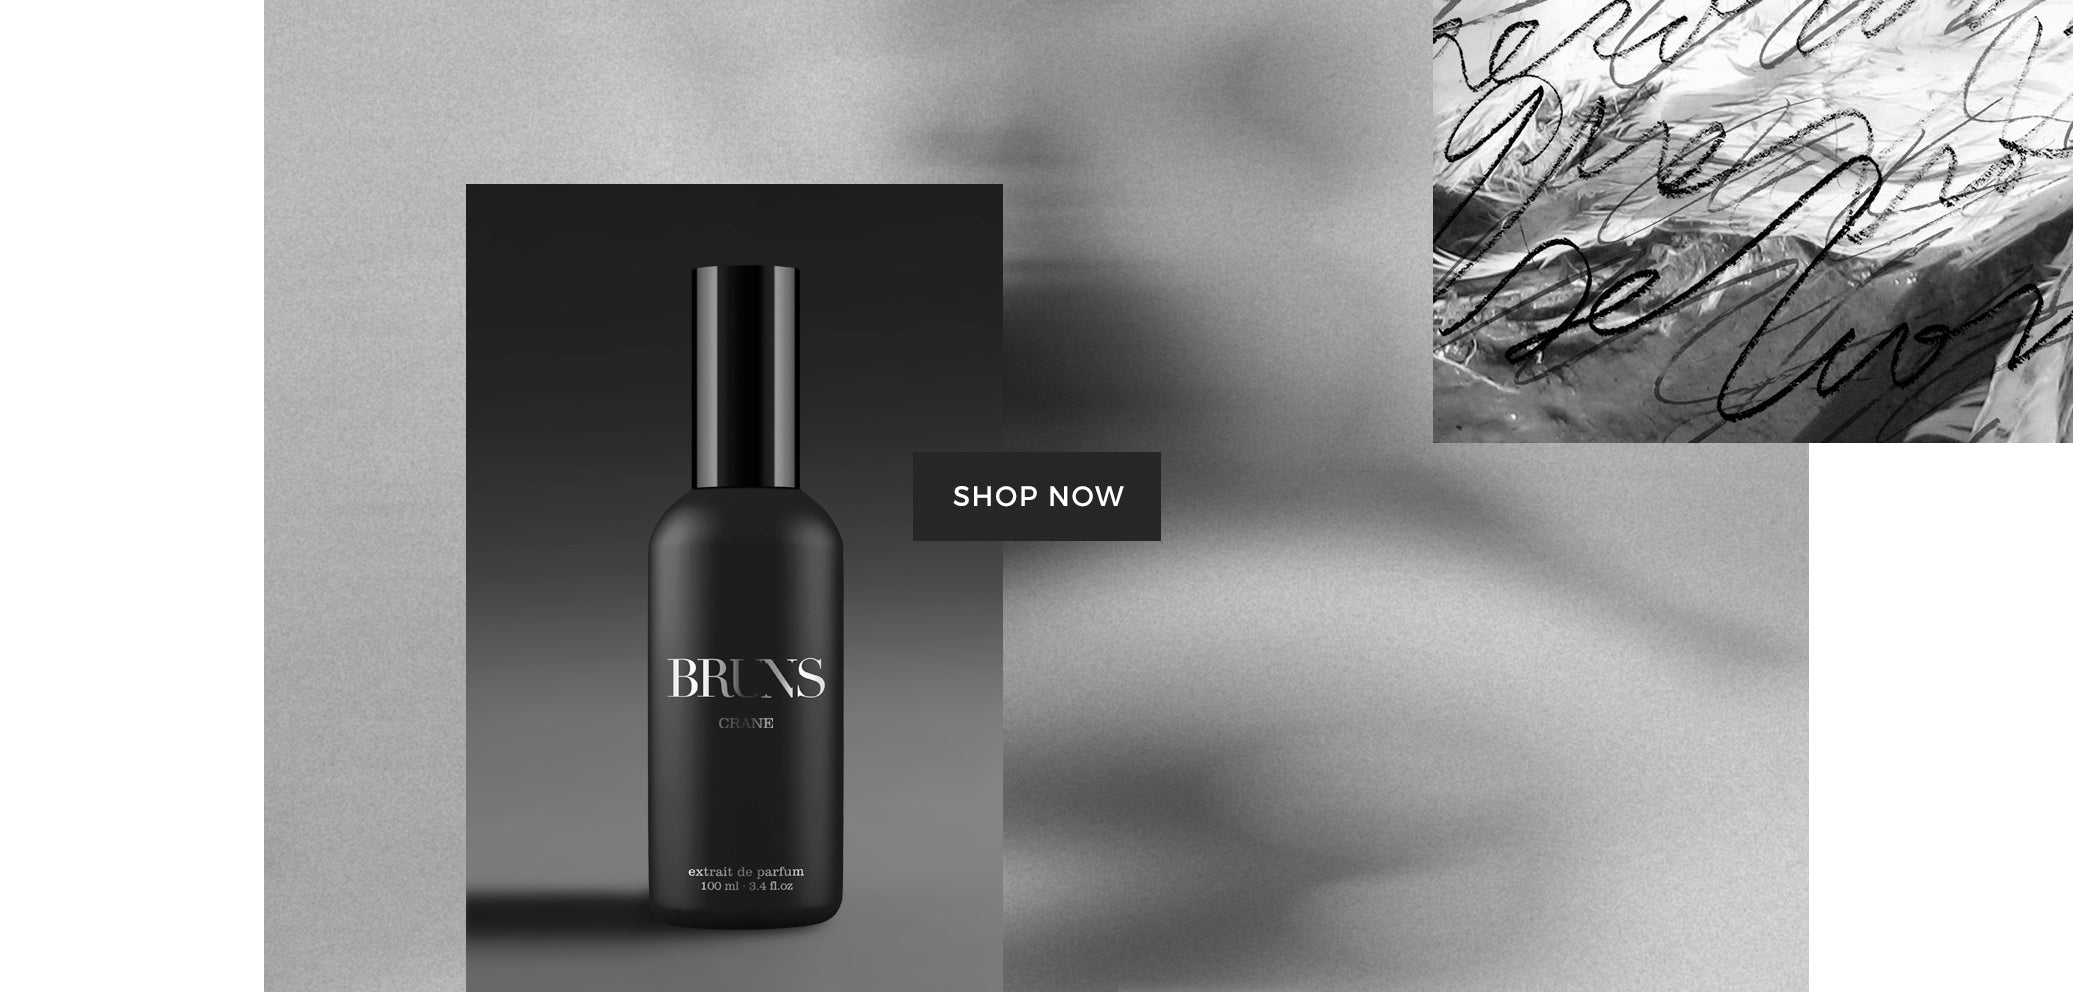 Crane, 100% natural perfume. Bruns Fragrances, shop online.